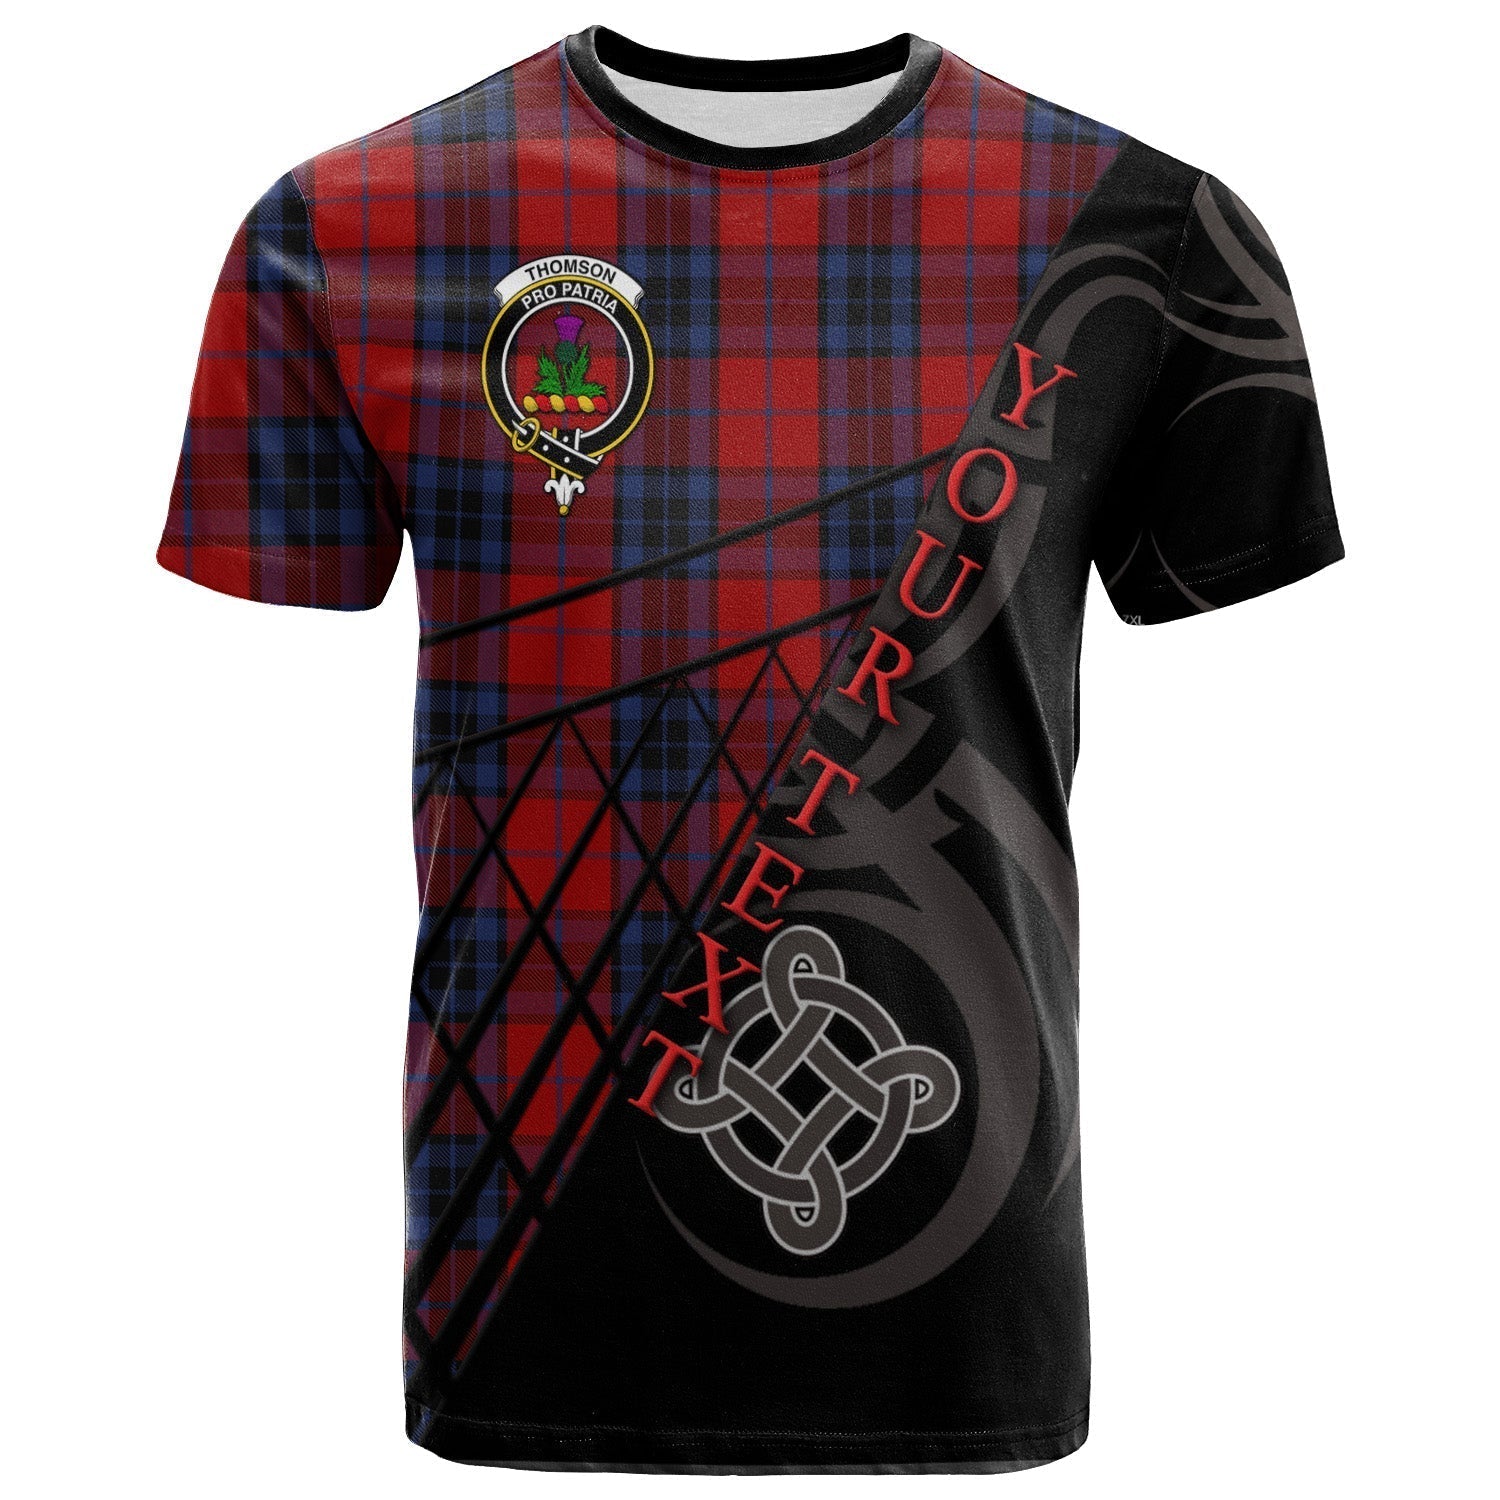 scottish-thompson-02-clan-crest-tartan-pattern-celtic-t-shirt